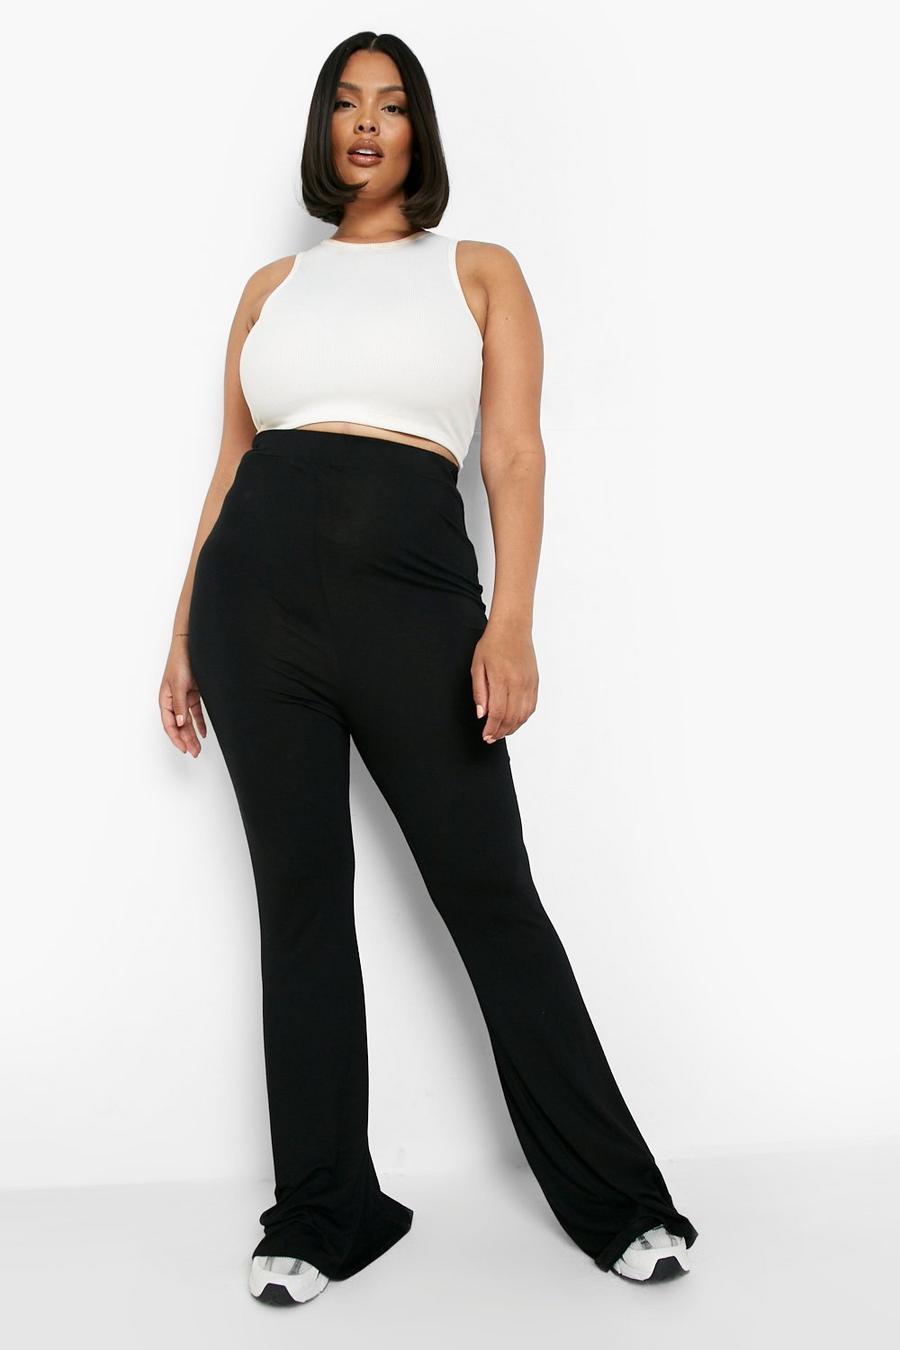 Black מכנסיים מתרחבים בייסיק high waist צמודים בחלק העליון, מידות גדולות